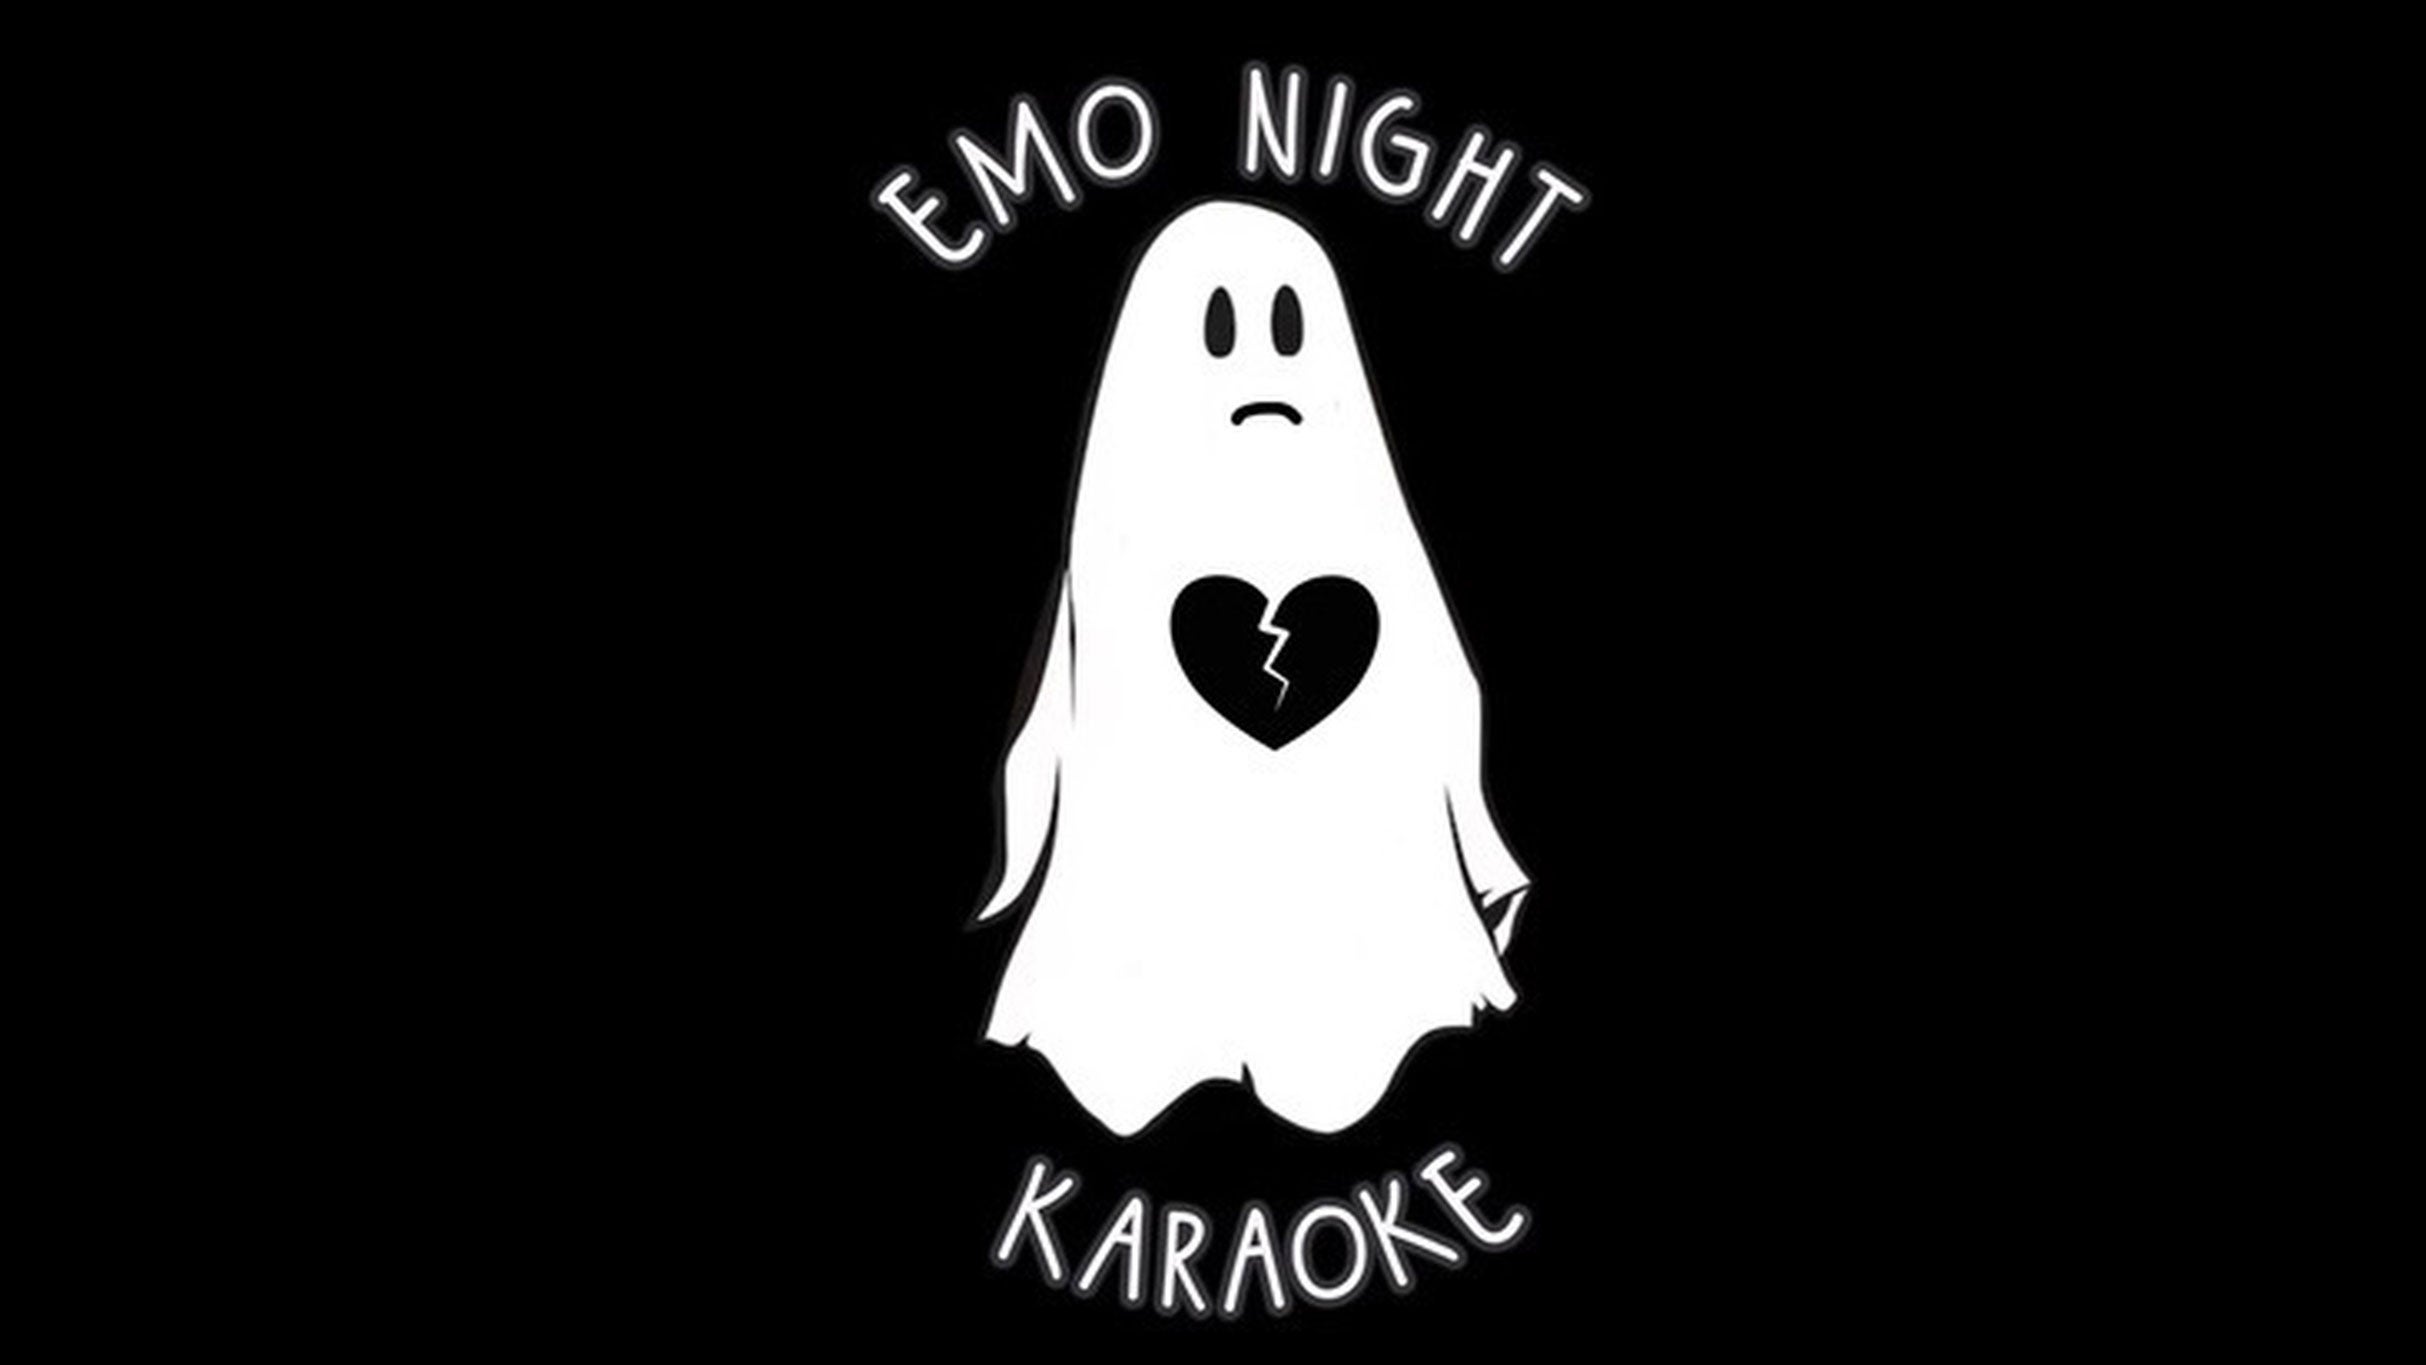 Emo Night Karaoke at Brooklyn Bowl